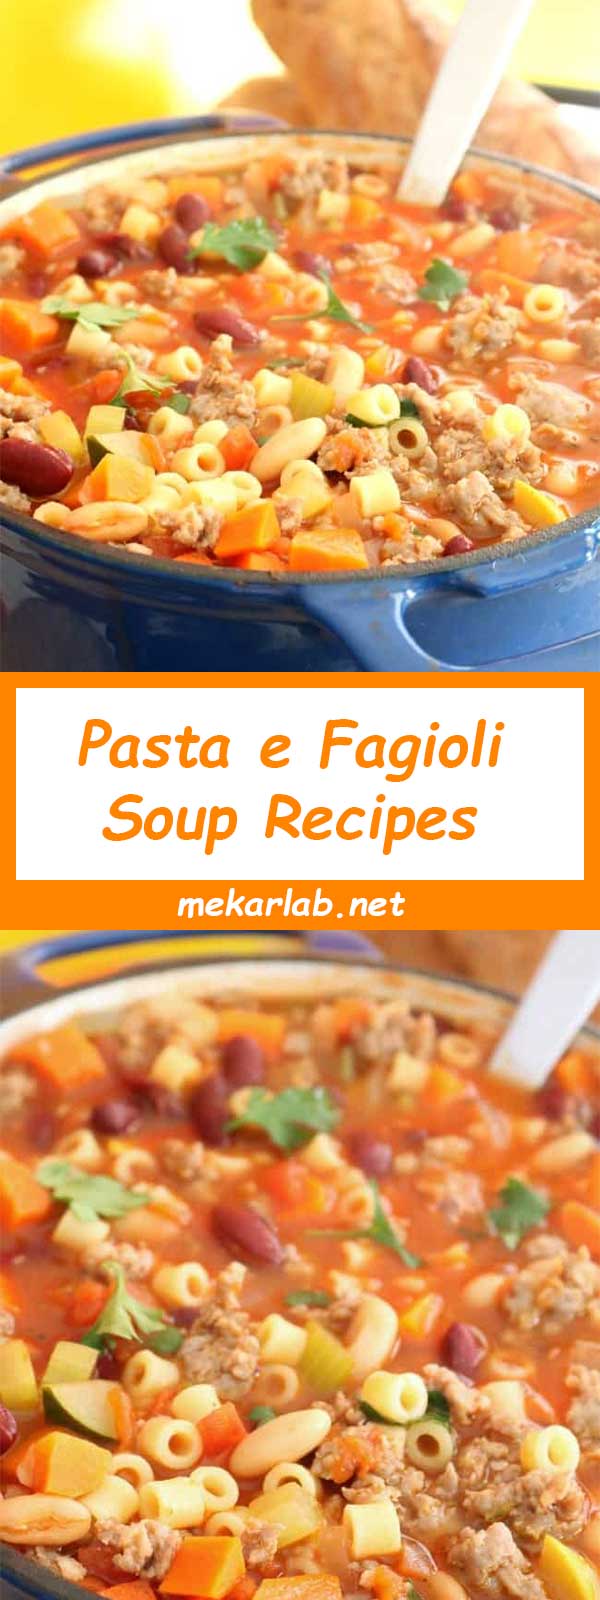 Pasta e Fagioli Soup Recipes